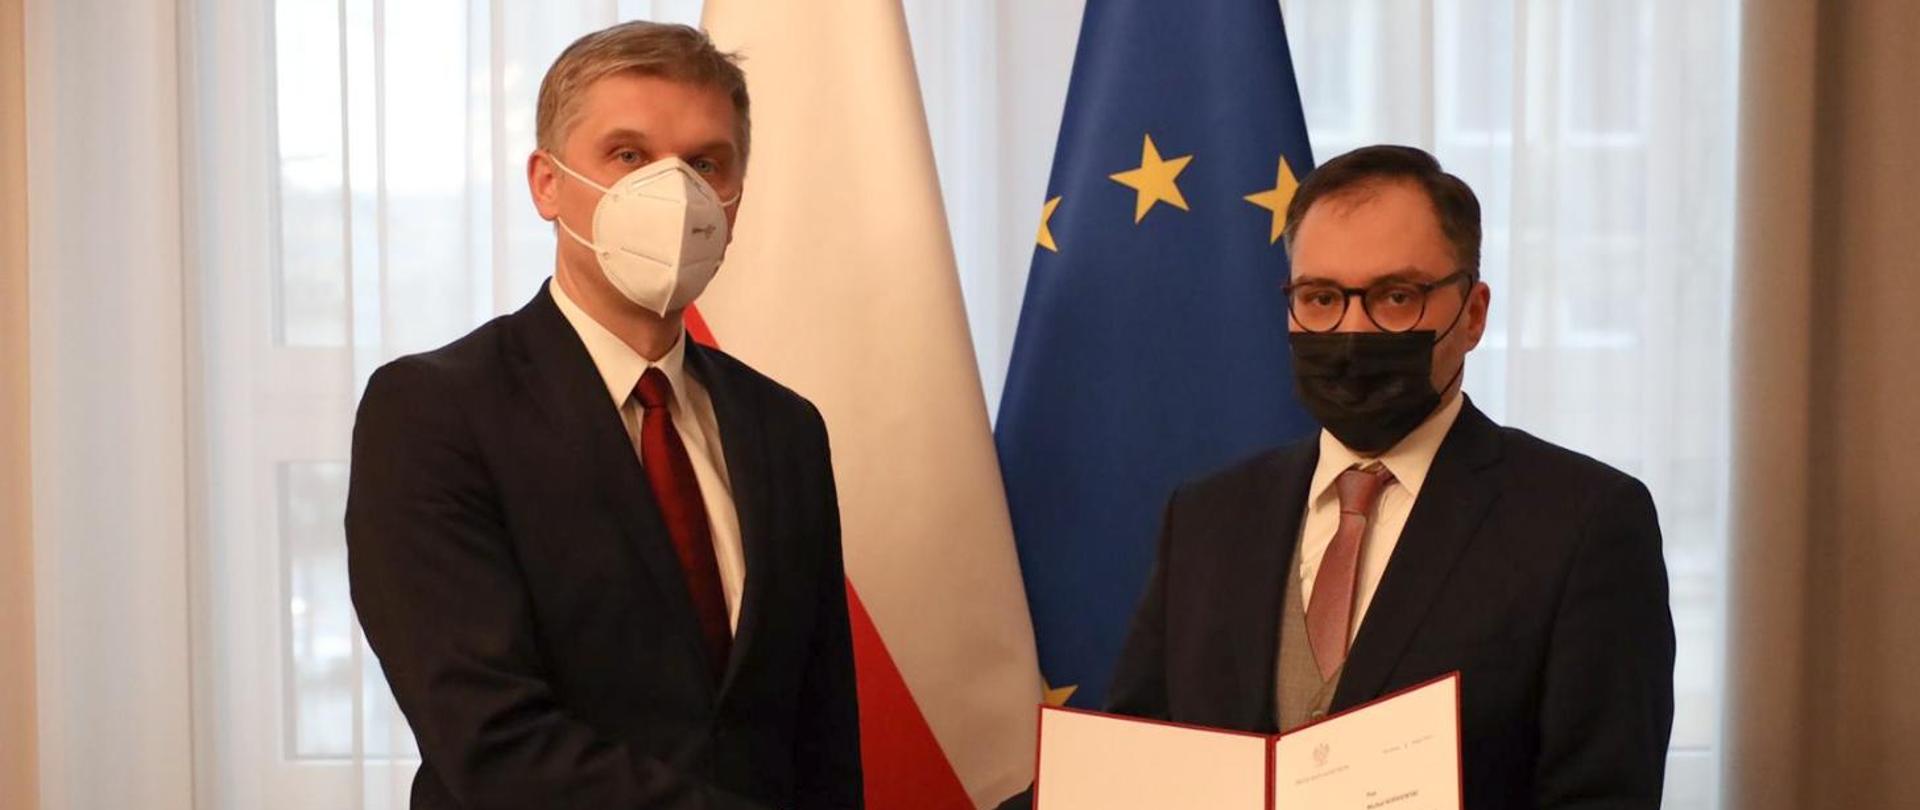 Minister of Economic Development and Technology Piotr Nowak and Minister Michał Wiśniewski wearing masks.